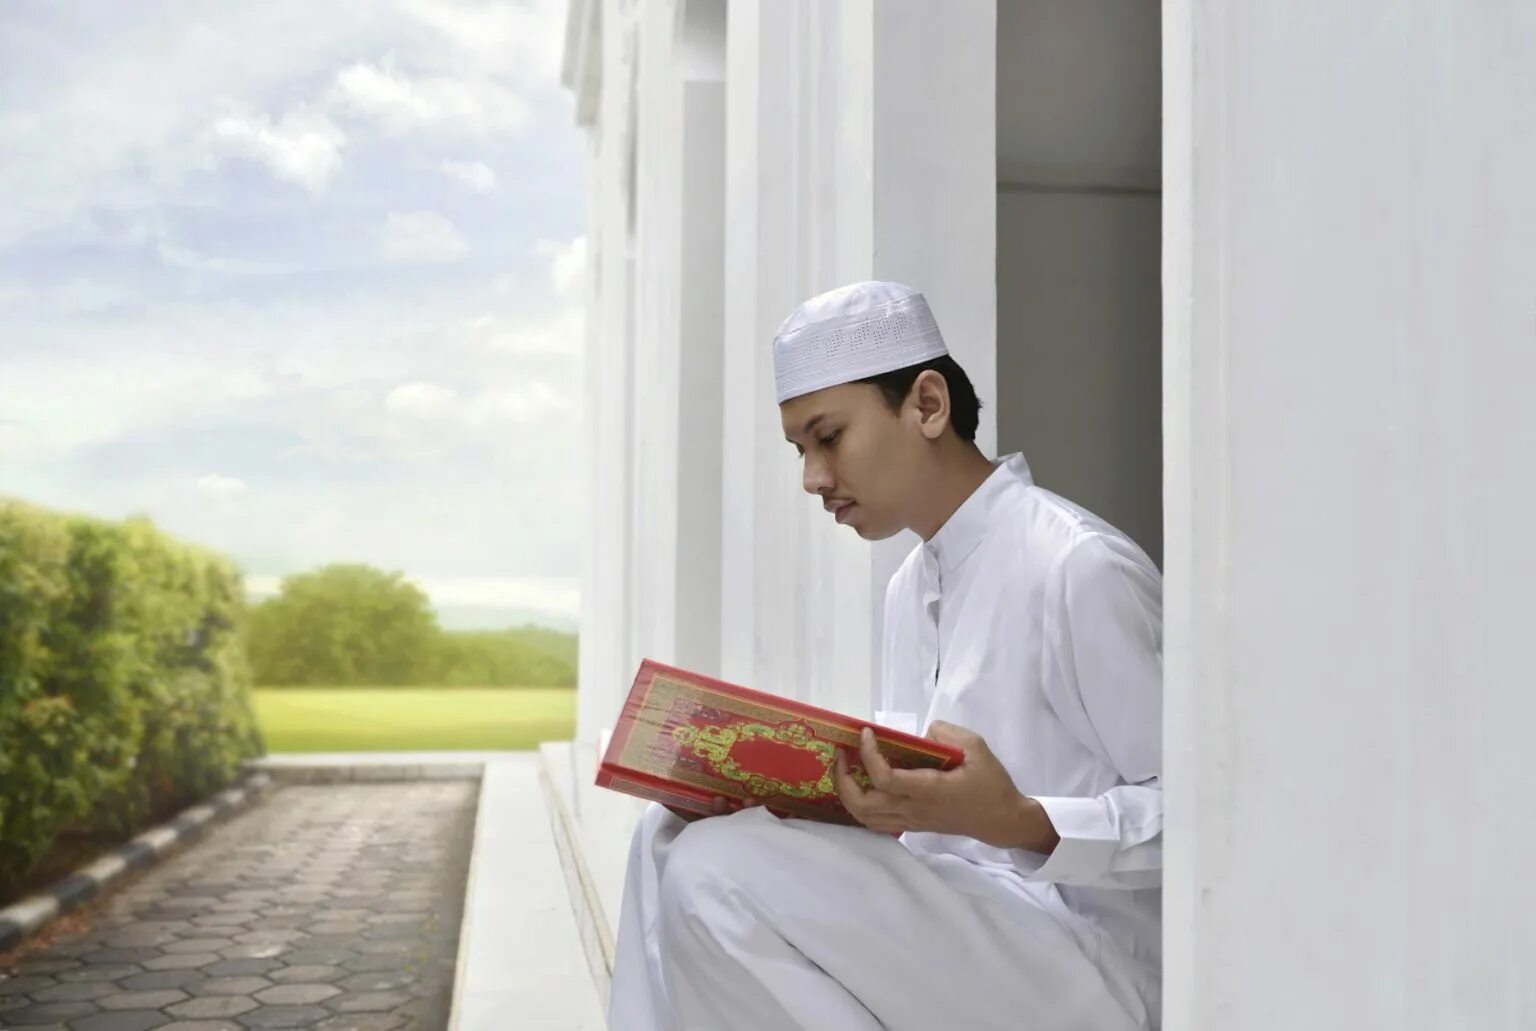 Читать коран лежа. Человек читает Коран. Девушка читает Коран. Маҳзунлик. Больной человек читает Коран.